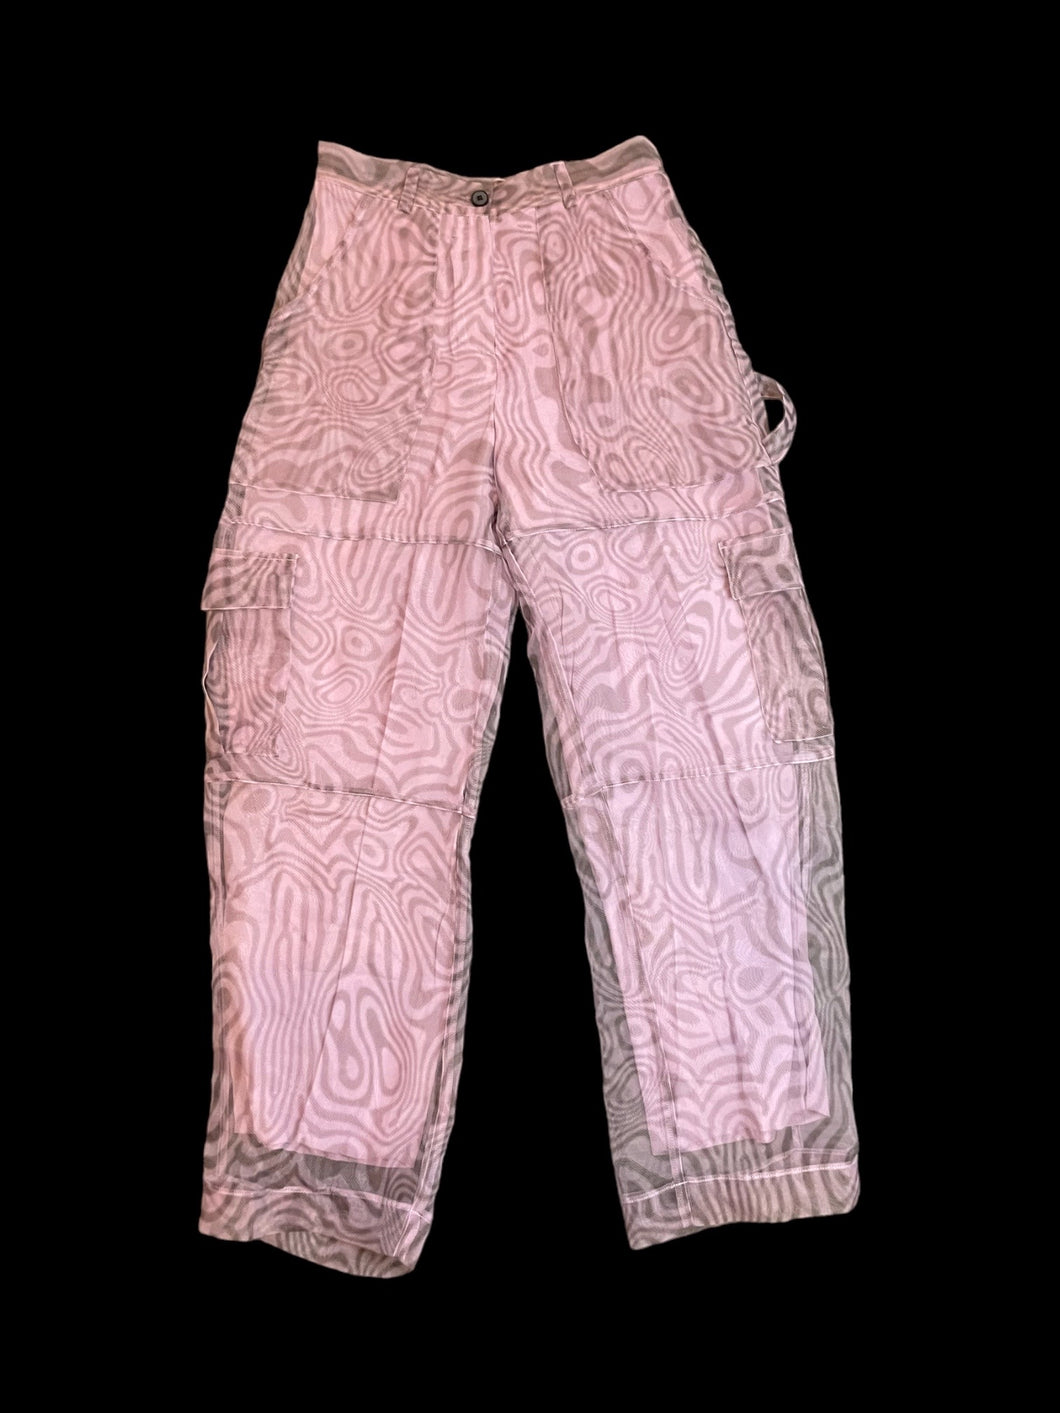 S Lilac & black swirl pattern sheer high waist straight leg cargo style pants w/ lilac lining, pockets, button/zipper closure, & belt loops